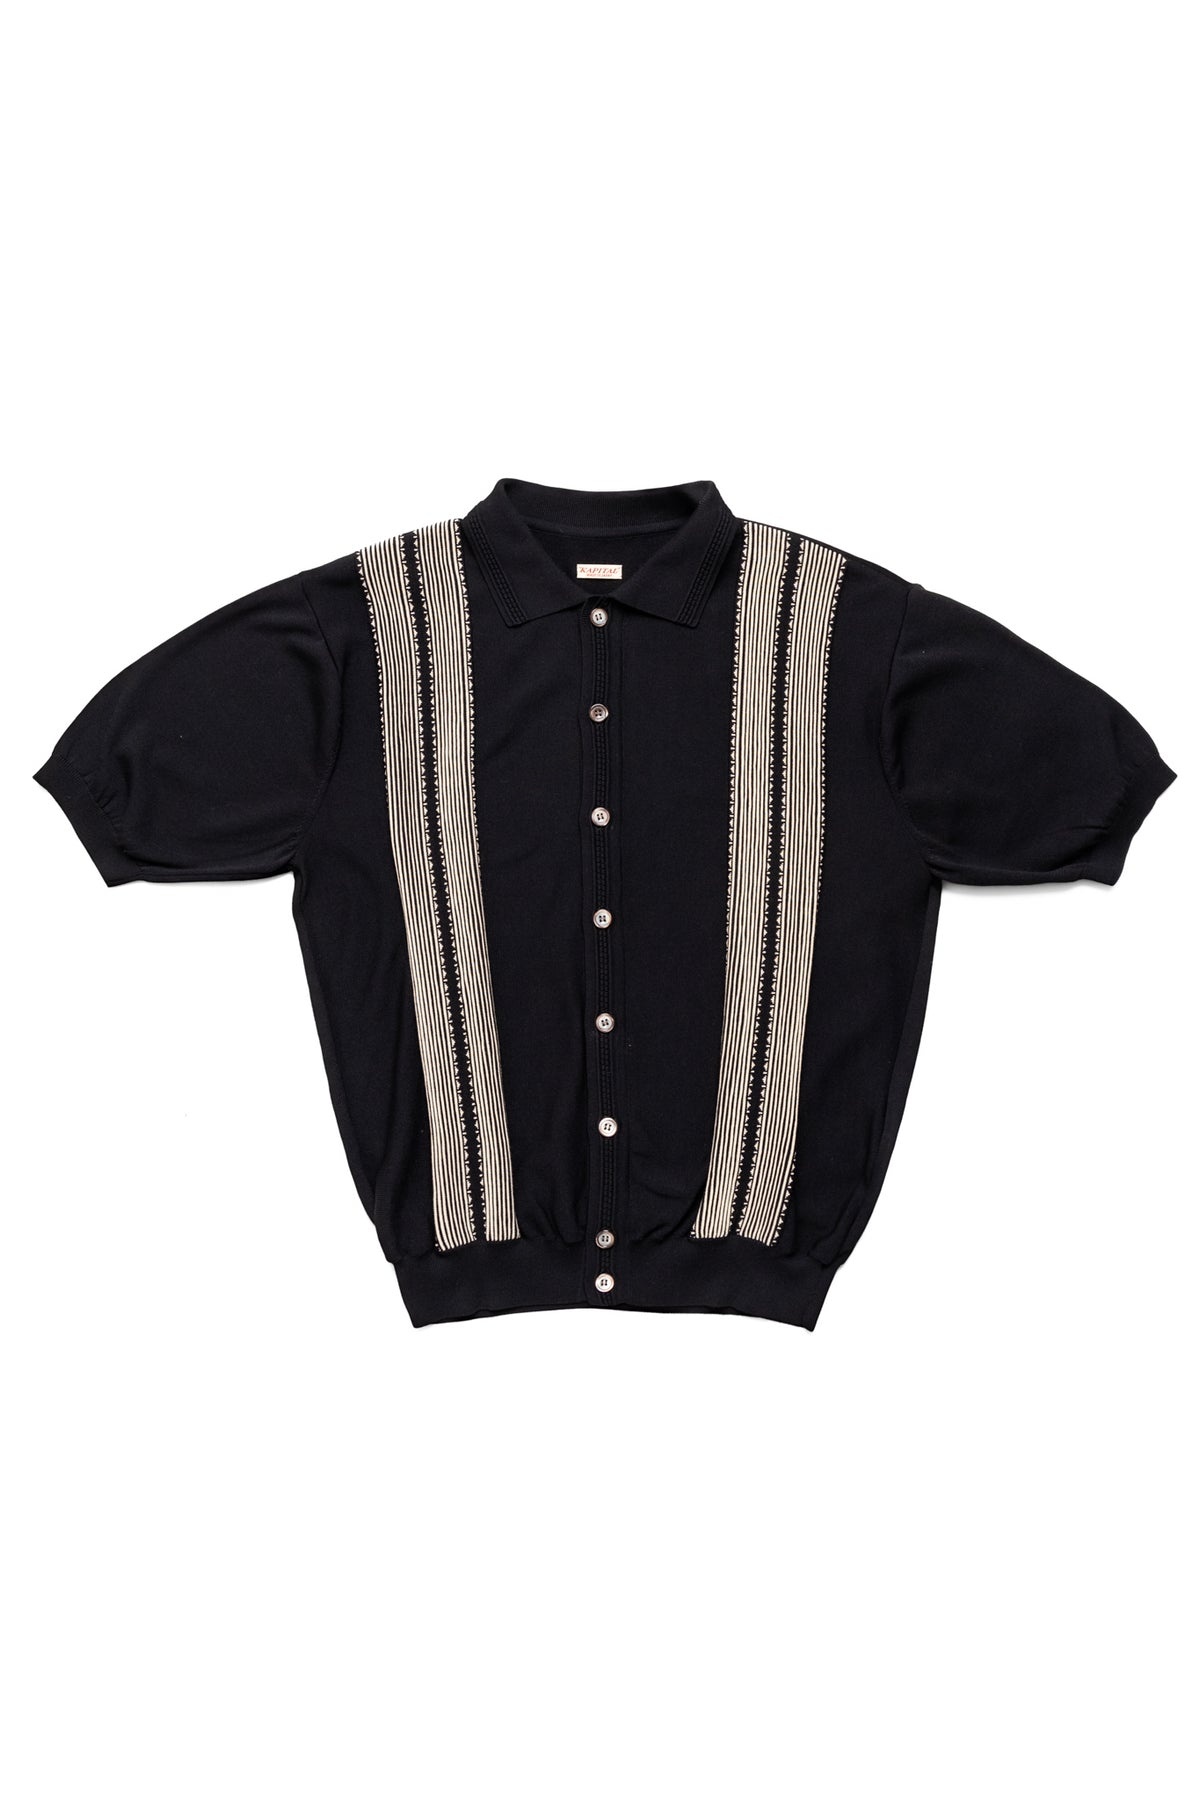 14G Cotton Knit OYSTER Aloha Polo - Black - 1